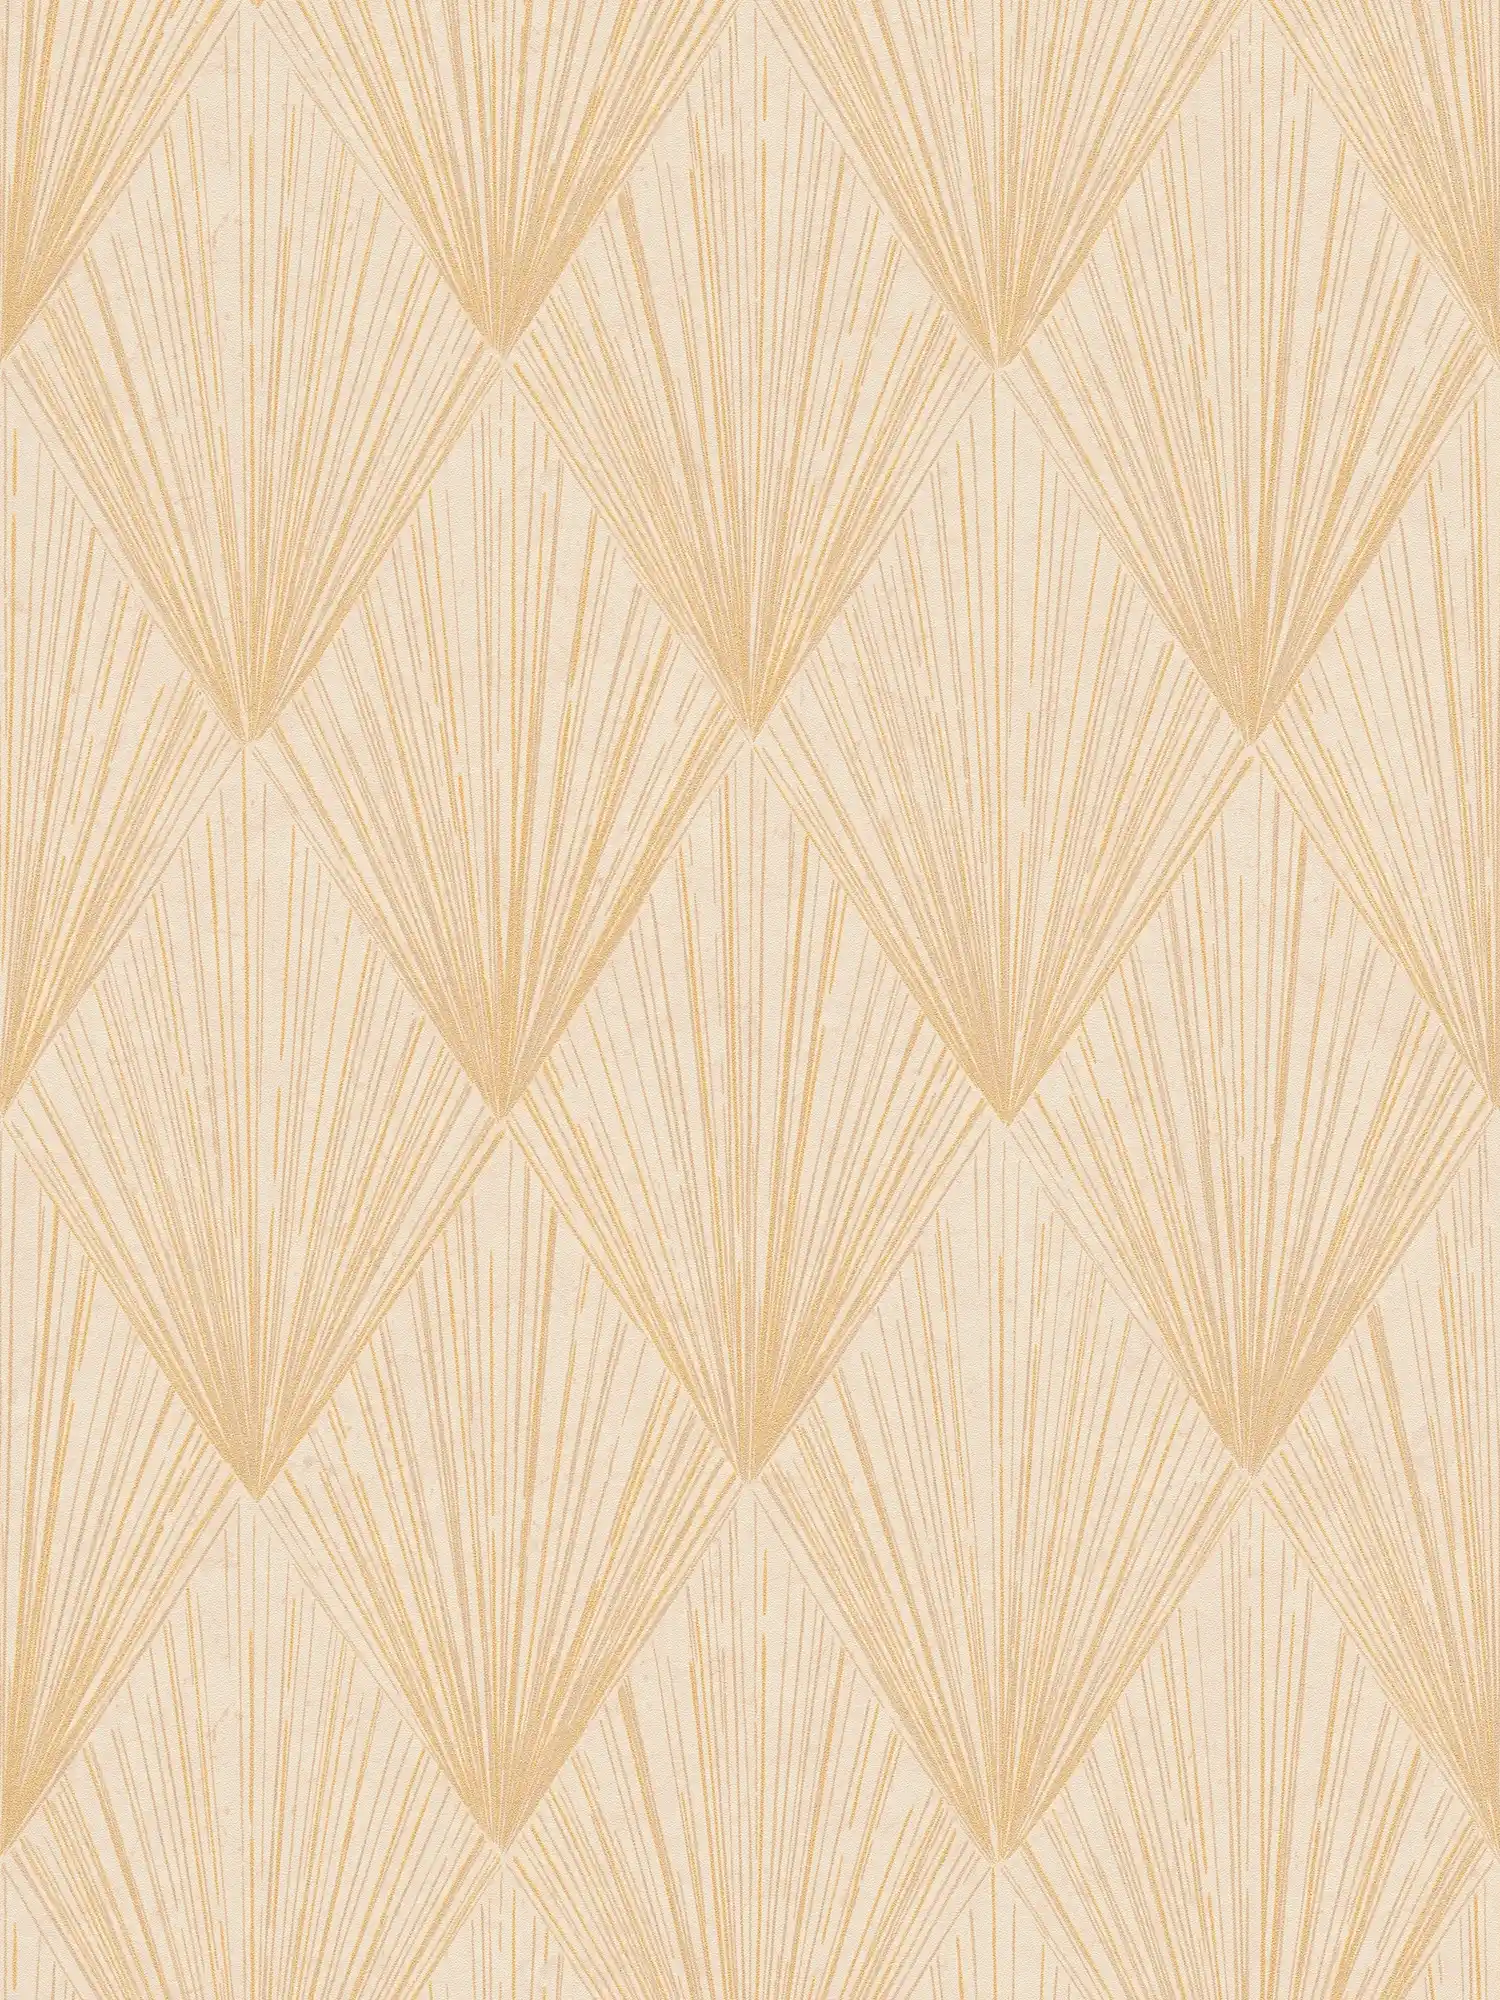 Wallpaper with gold pattern in new art deco style - beige, metallic
